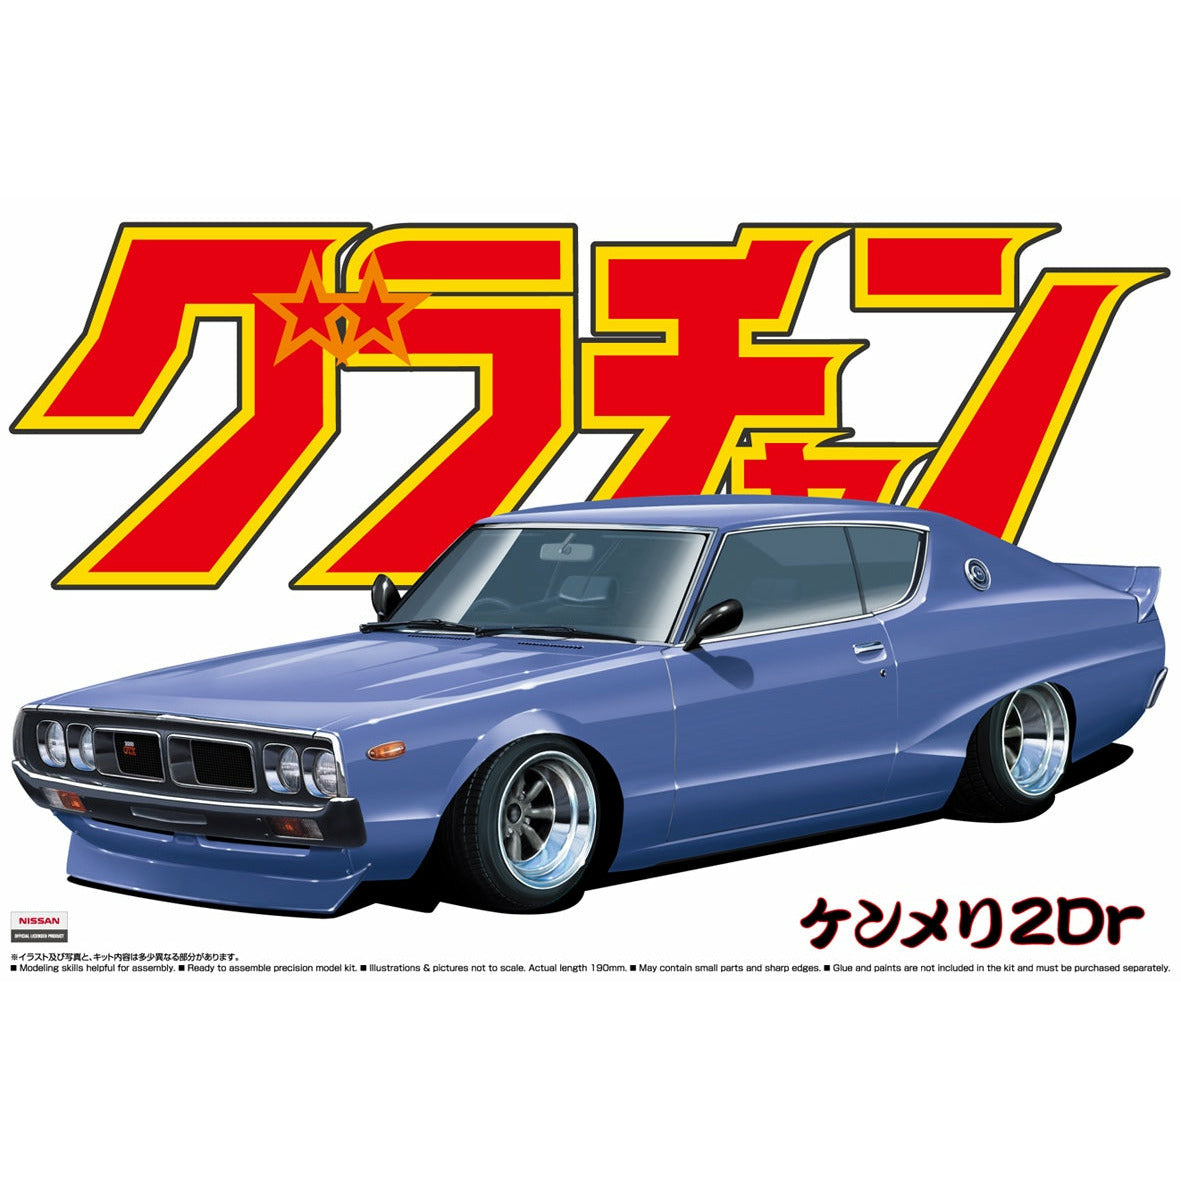 Skyline HT 2000GT-X (Nissan) 1/24 #4265 by Aoshima